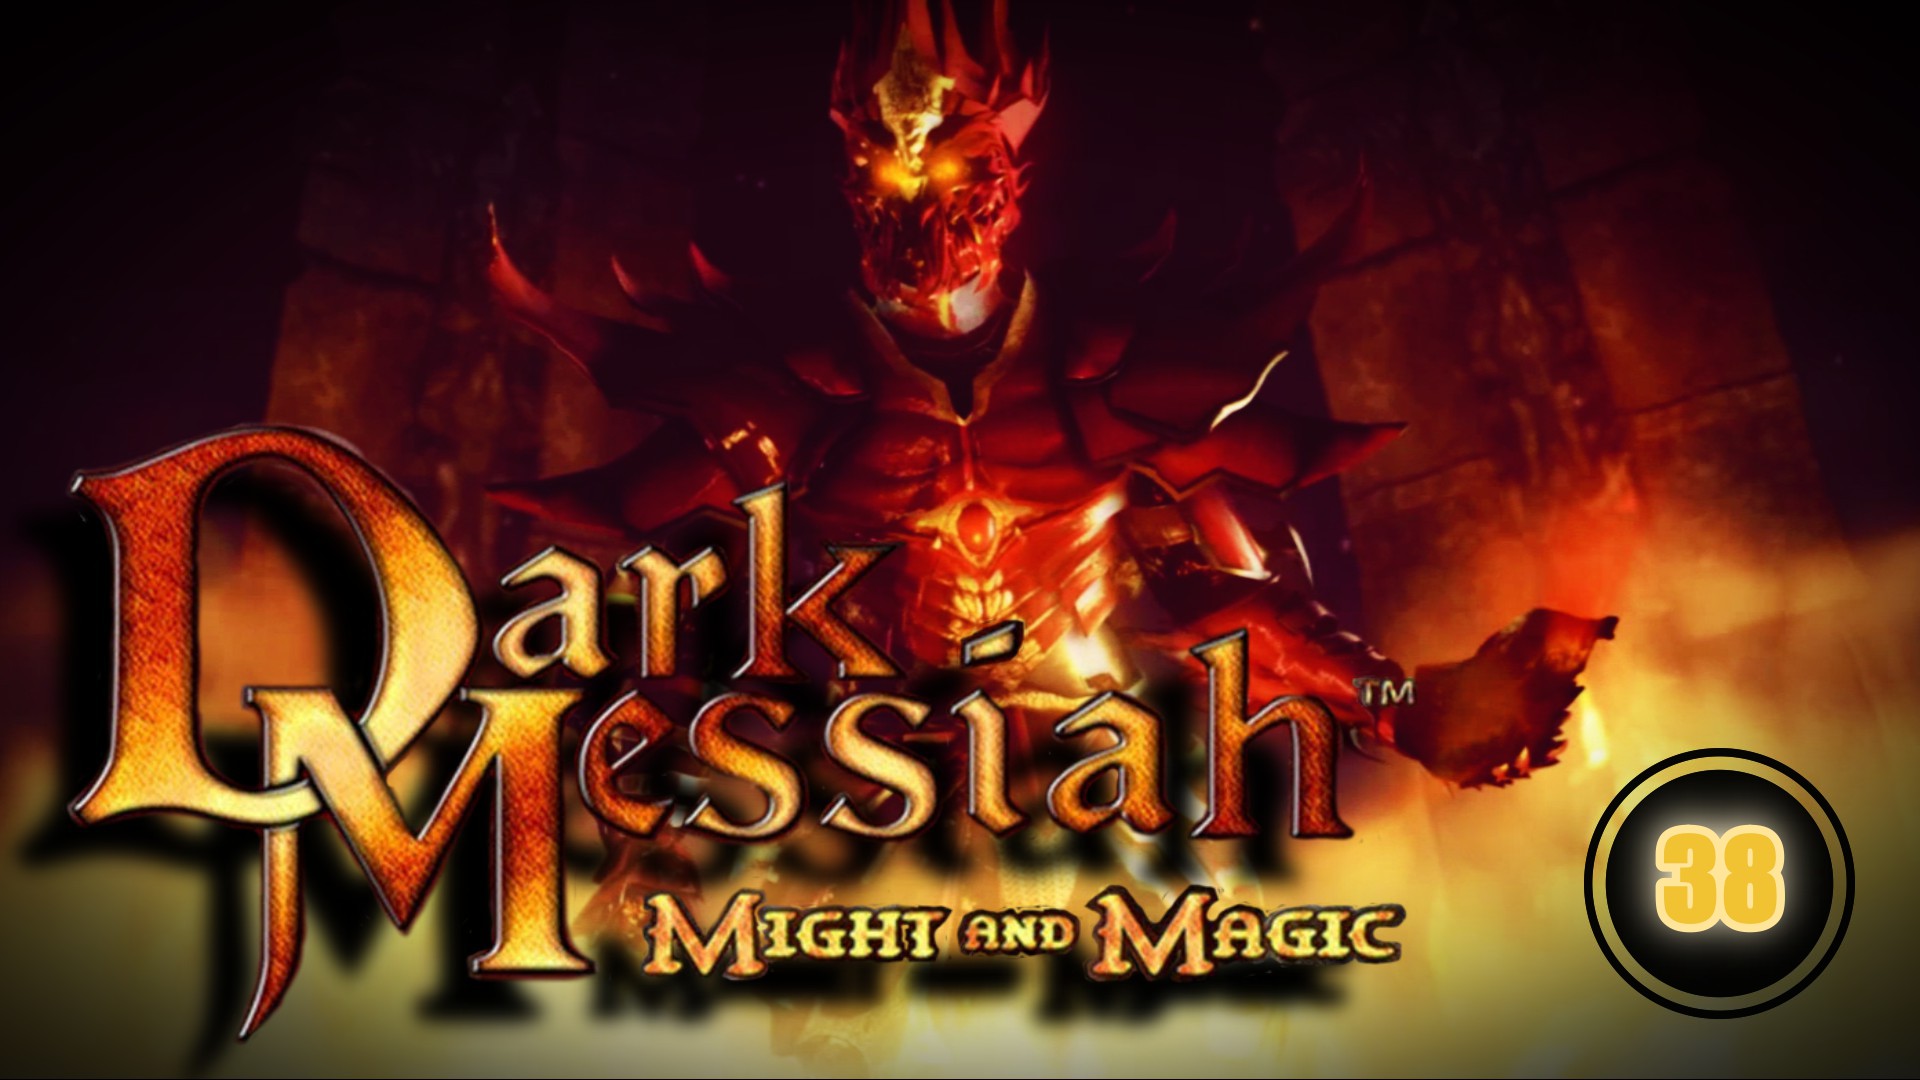 Dark Messiah of Might and Magic 38